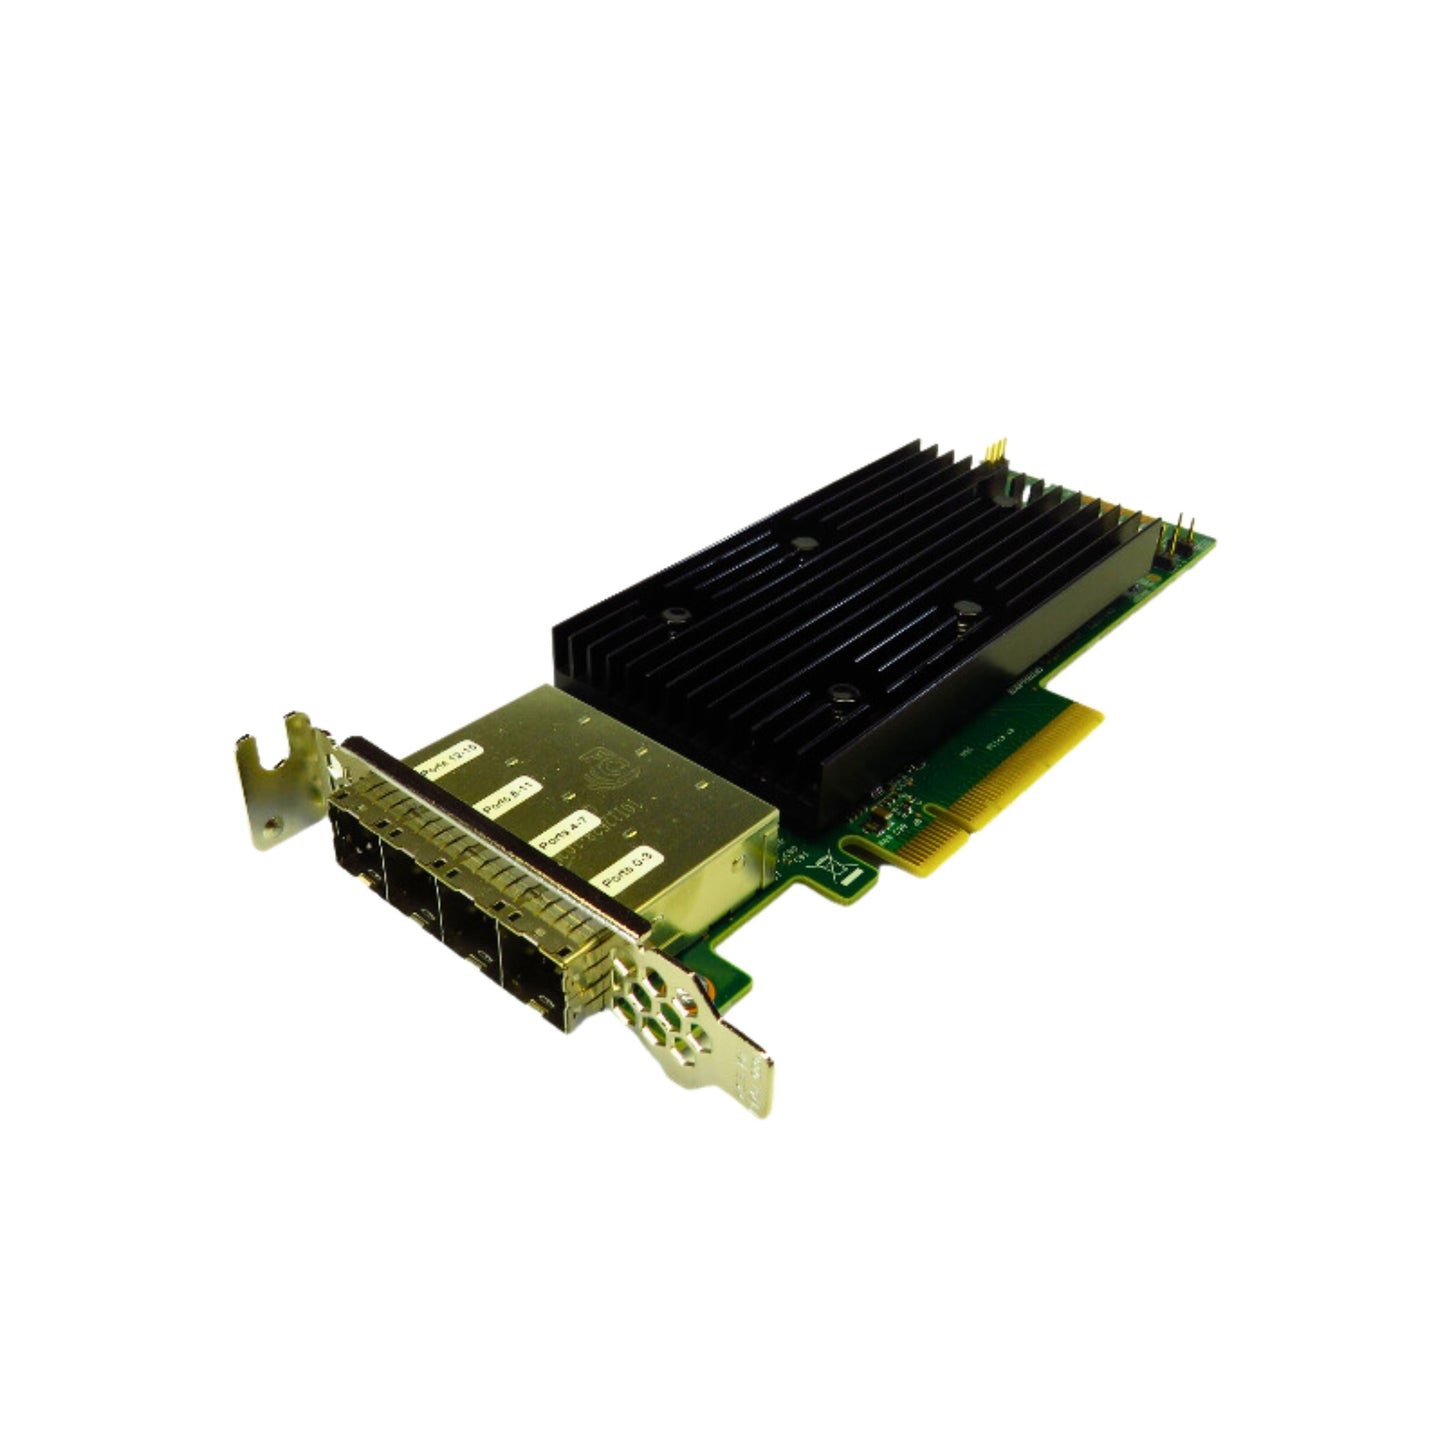 IBM 01EM701 4 Port SAS 12Gbps HBA Host Bus Adapter Card (Refurbished)